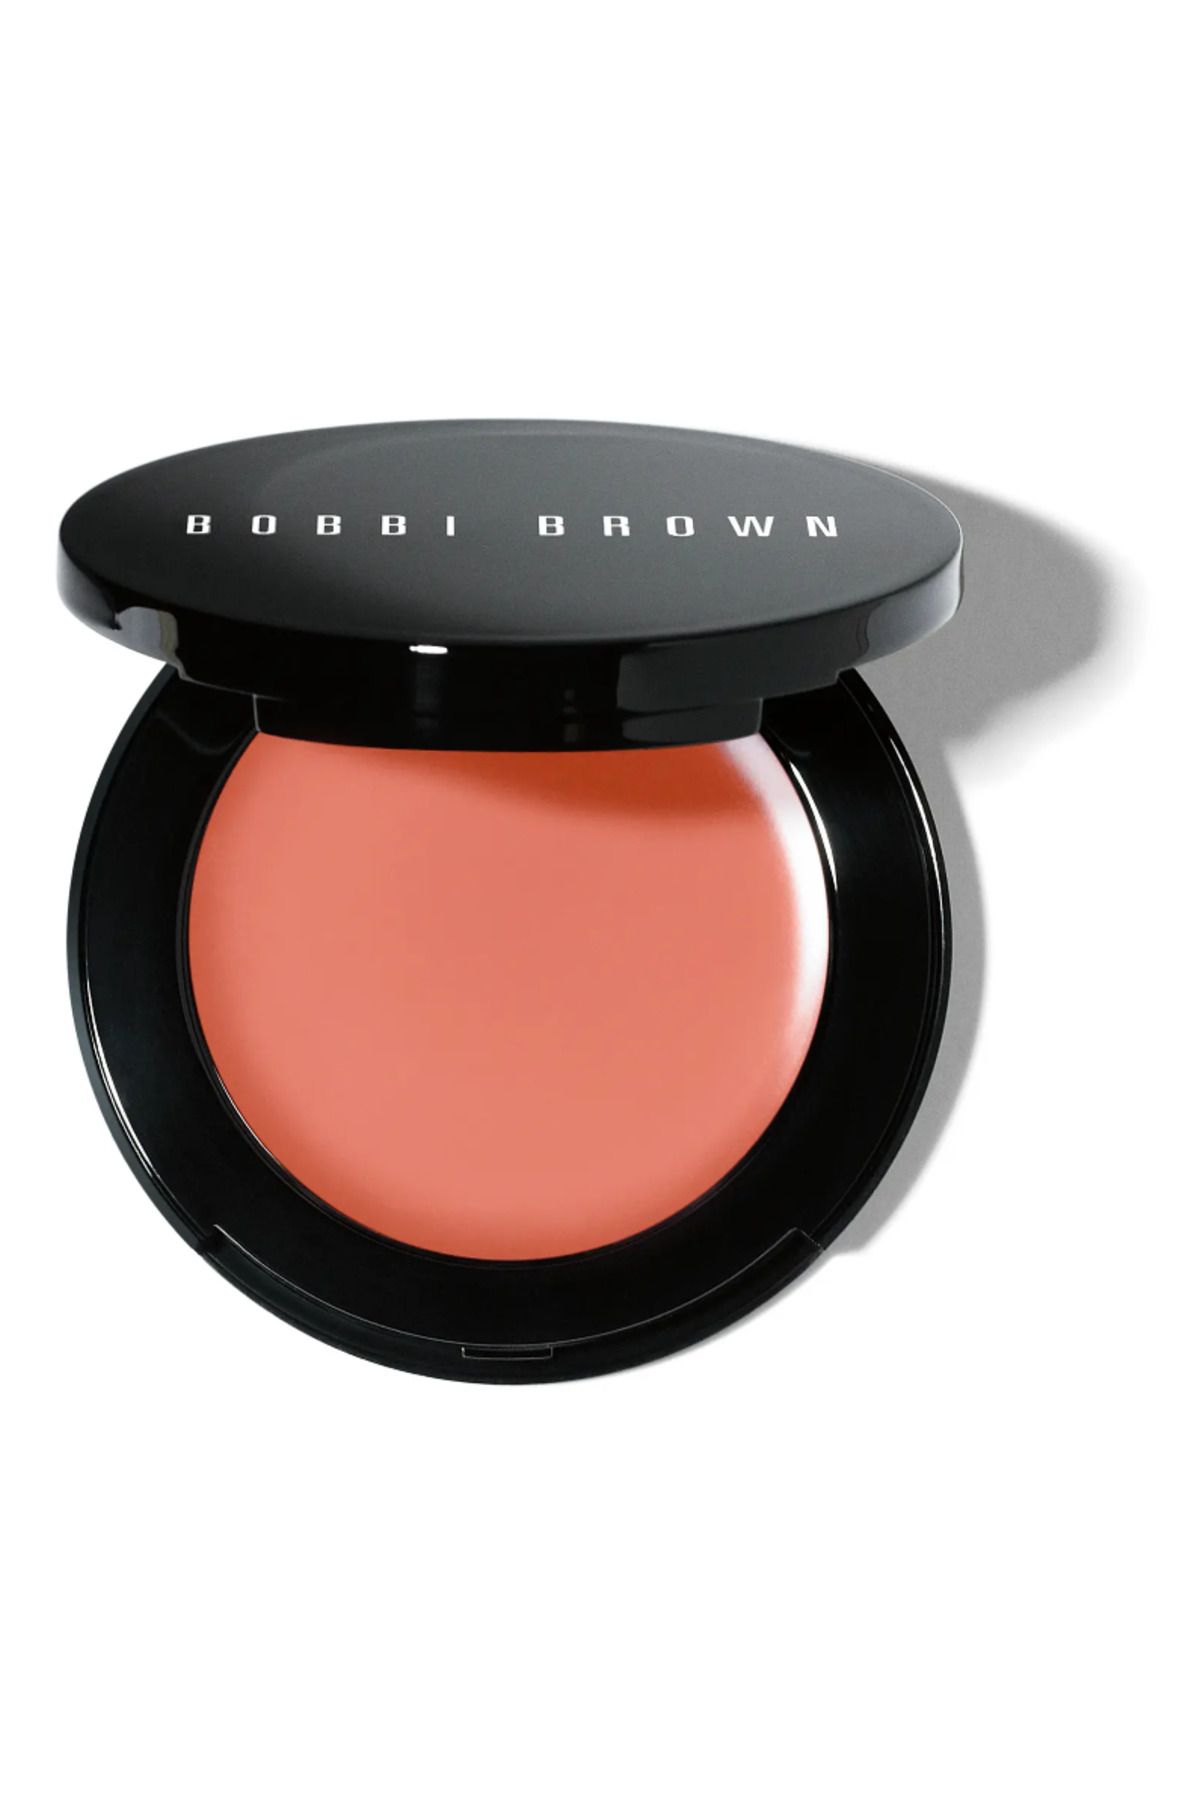 Bobbi Brown Pot Rouge Blush for Lips & Cheeks